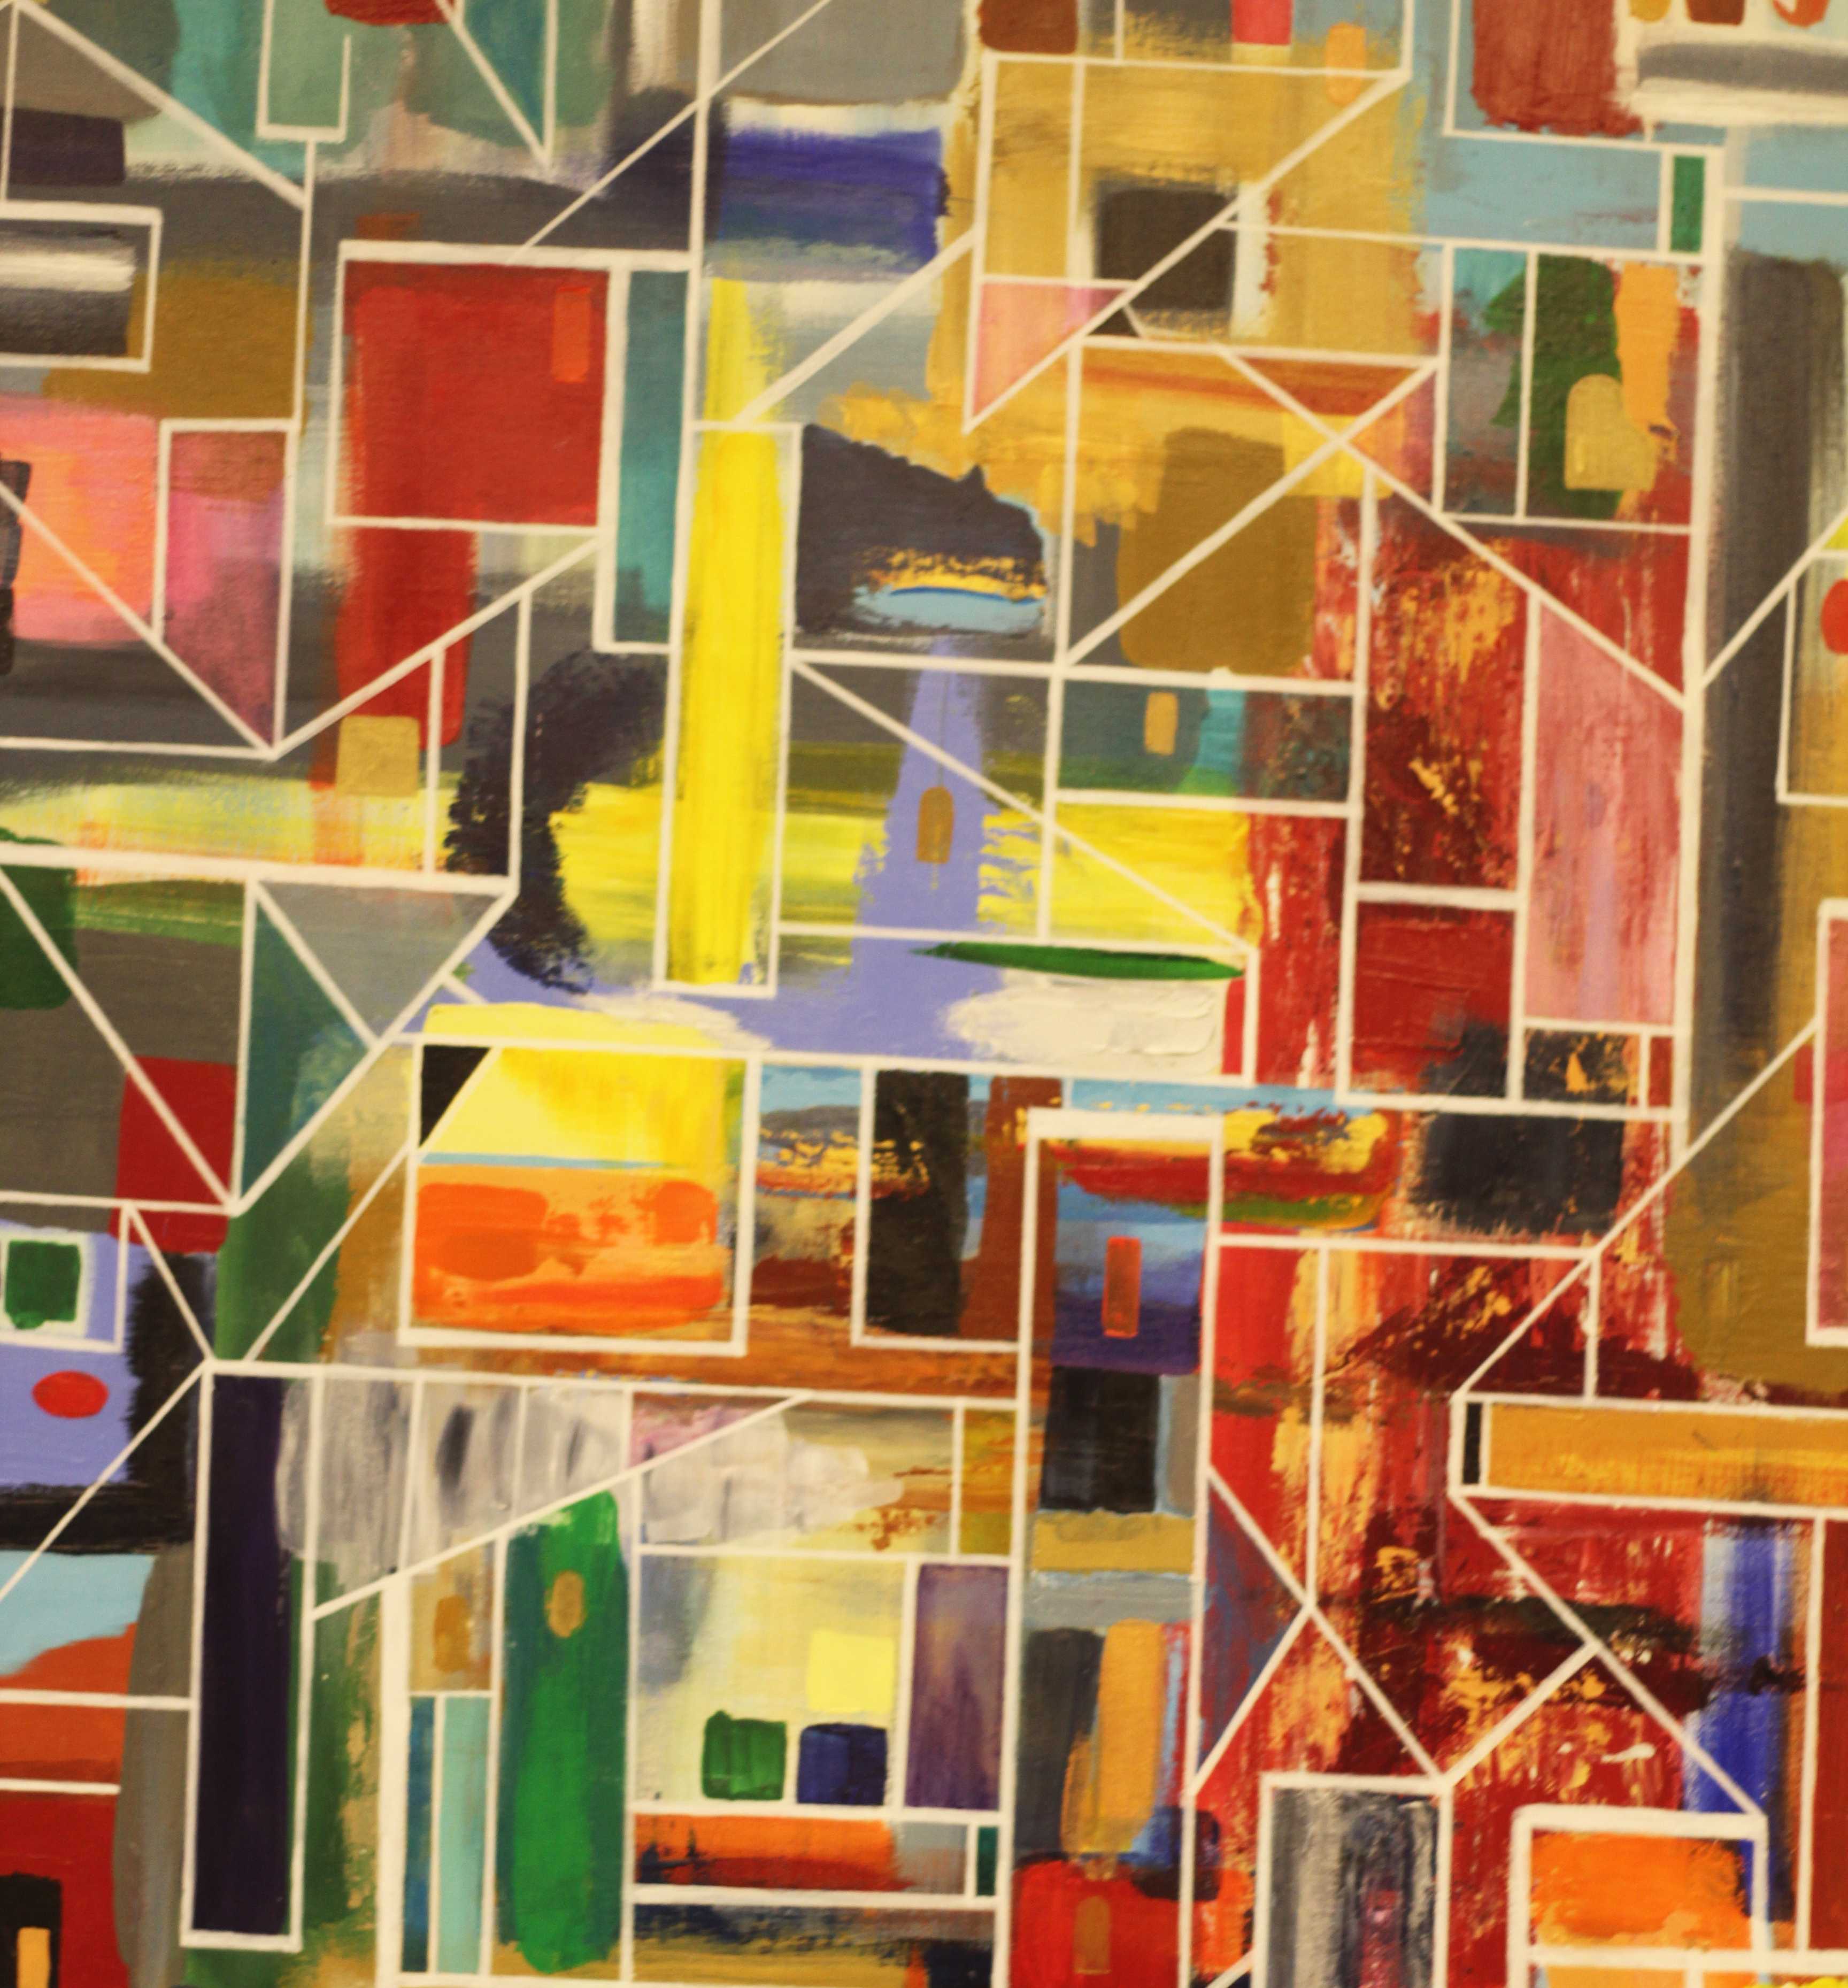 Senior%E2%80%99s+abstract+paintings+bring+color+to+Iwasaki+Library